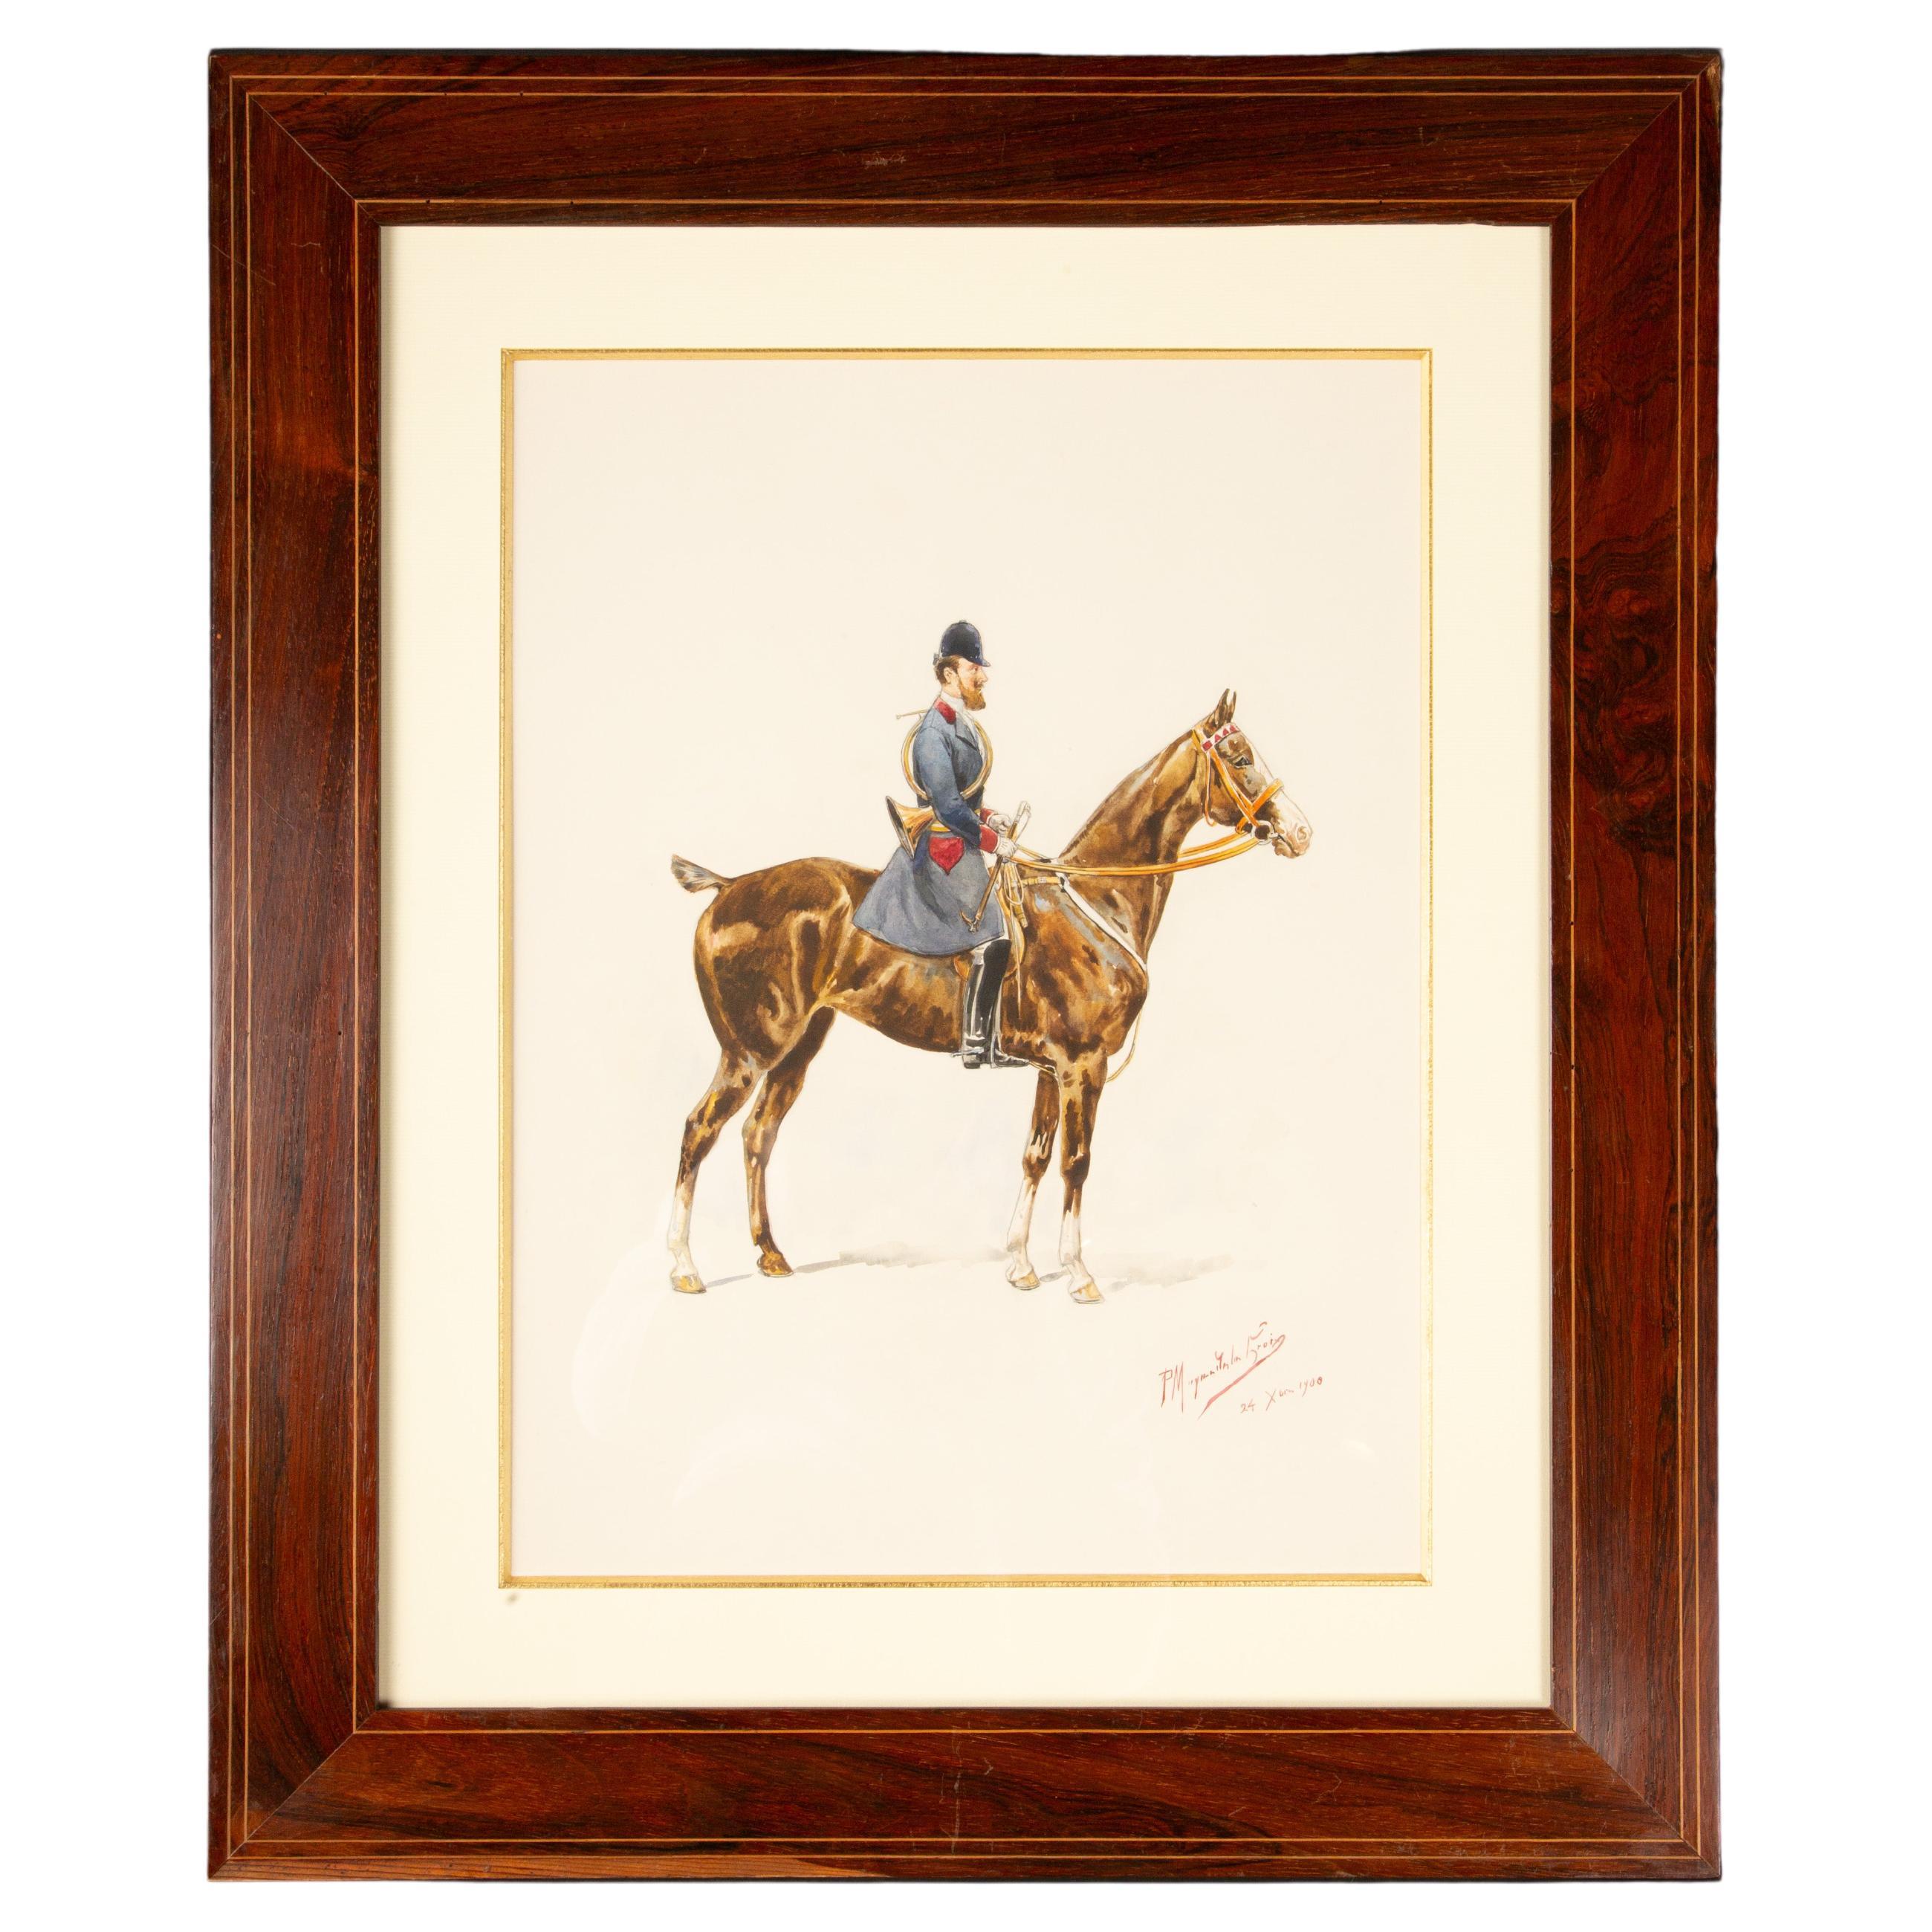 Timeless Equestrian Elegance: Paul Magne De La Croix' Aquarell von 1900 